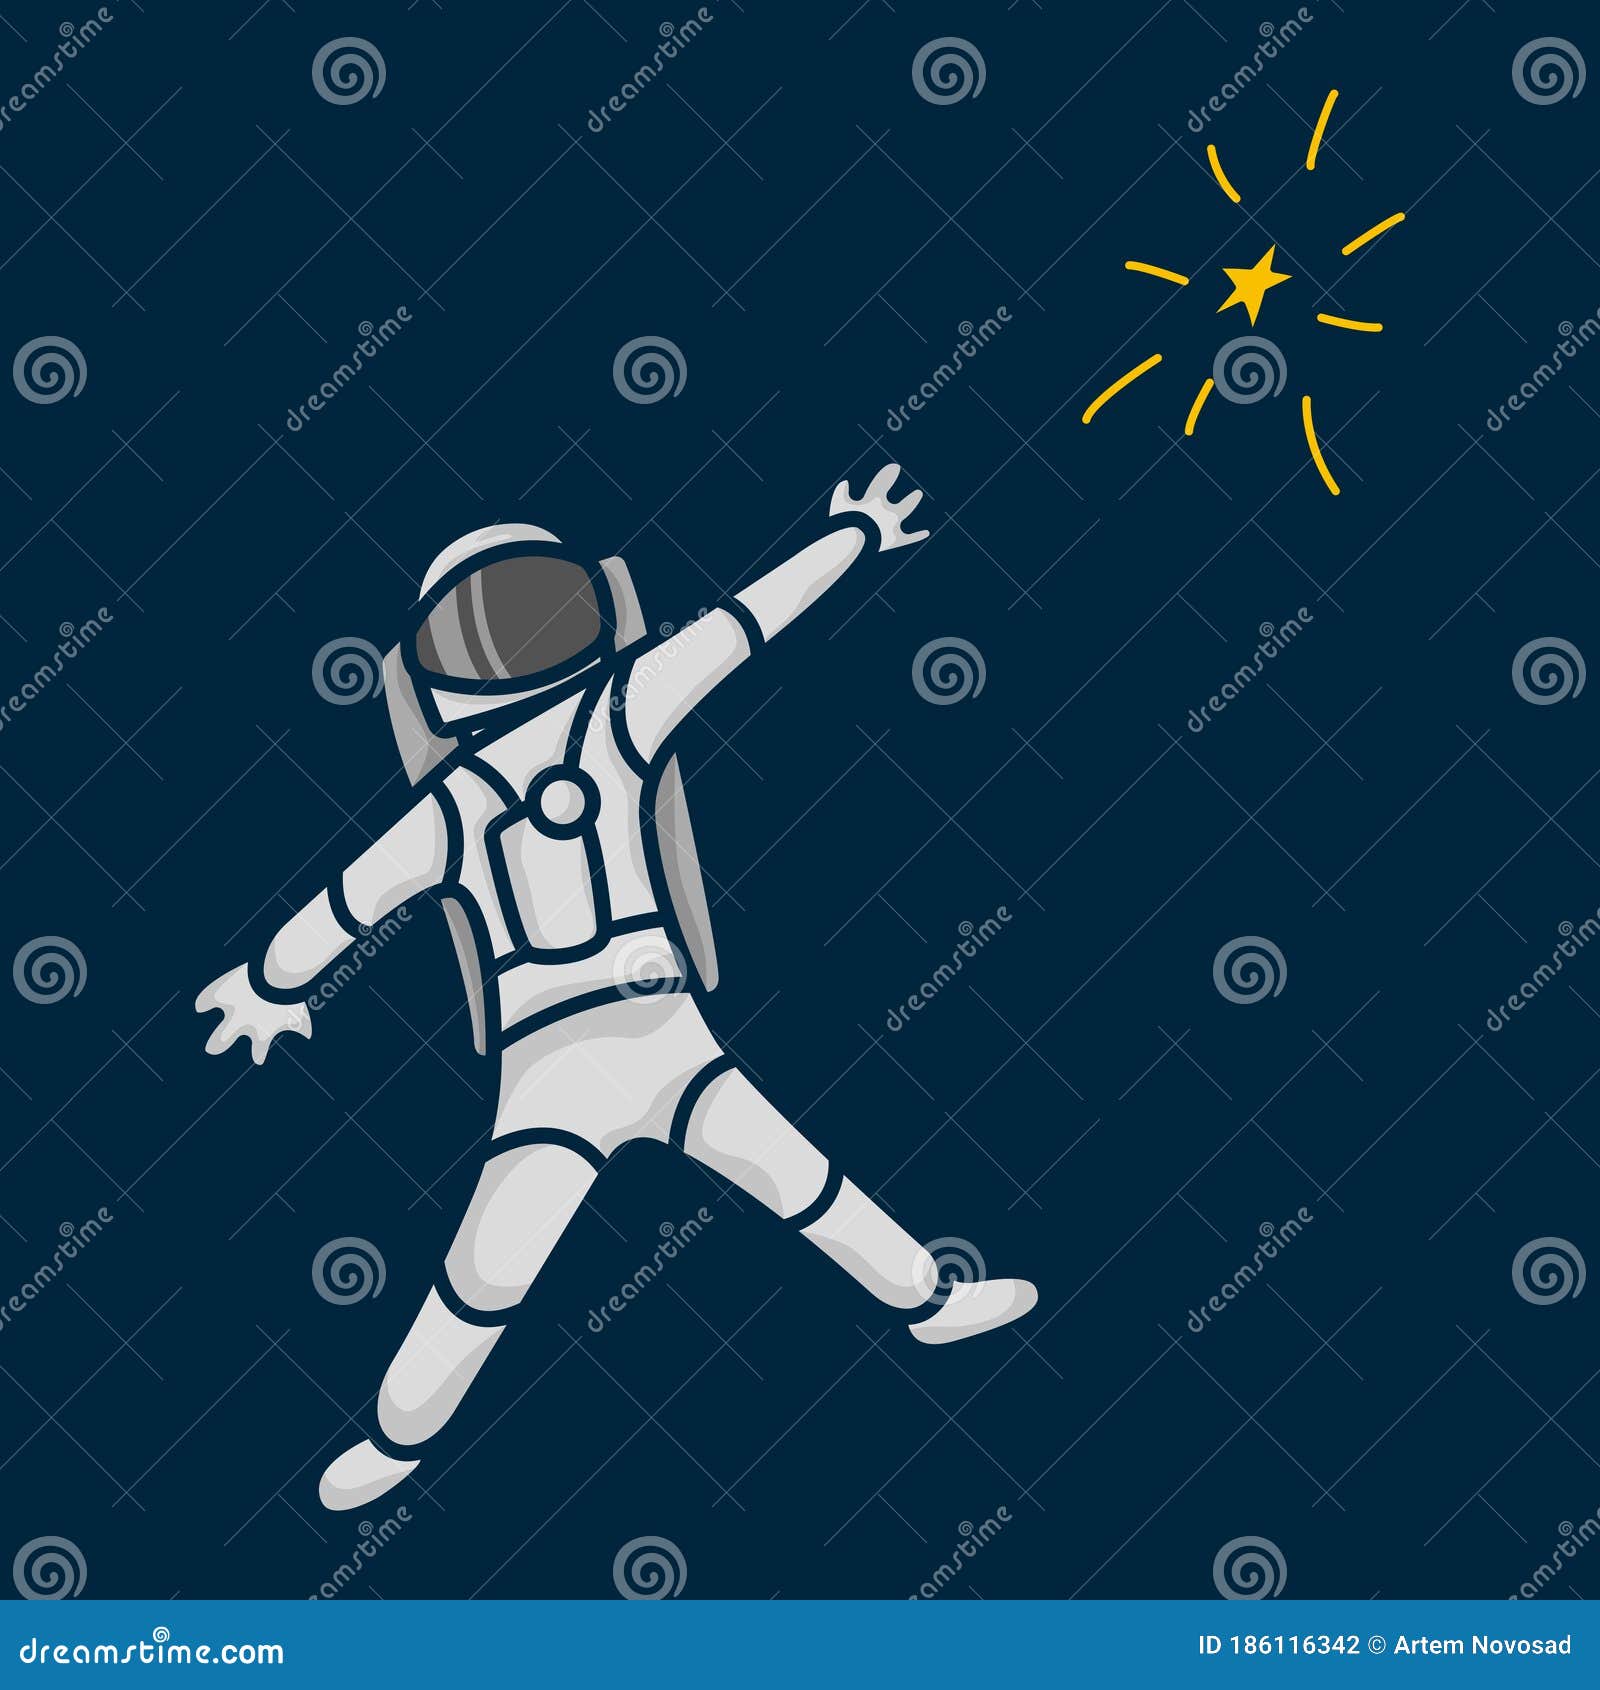 Casco Astronauta, Ilustración De Dibujo Vectorial a Mano En Fondo